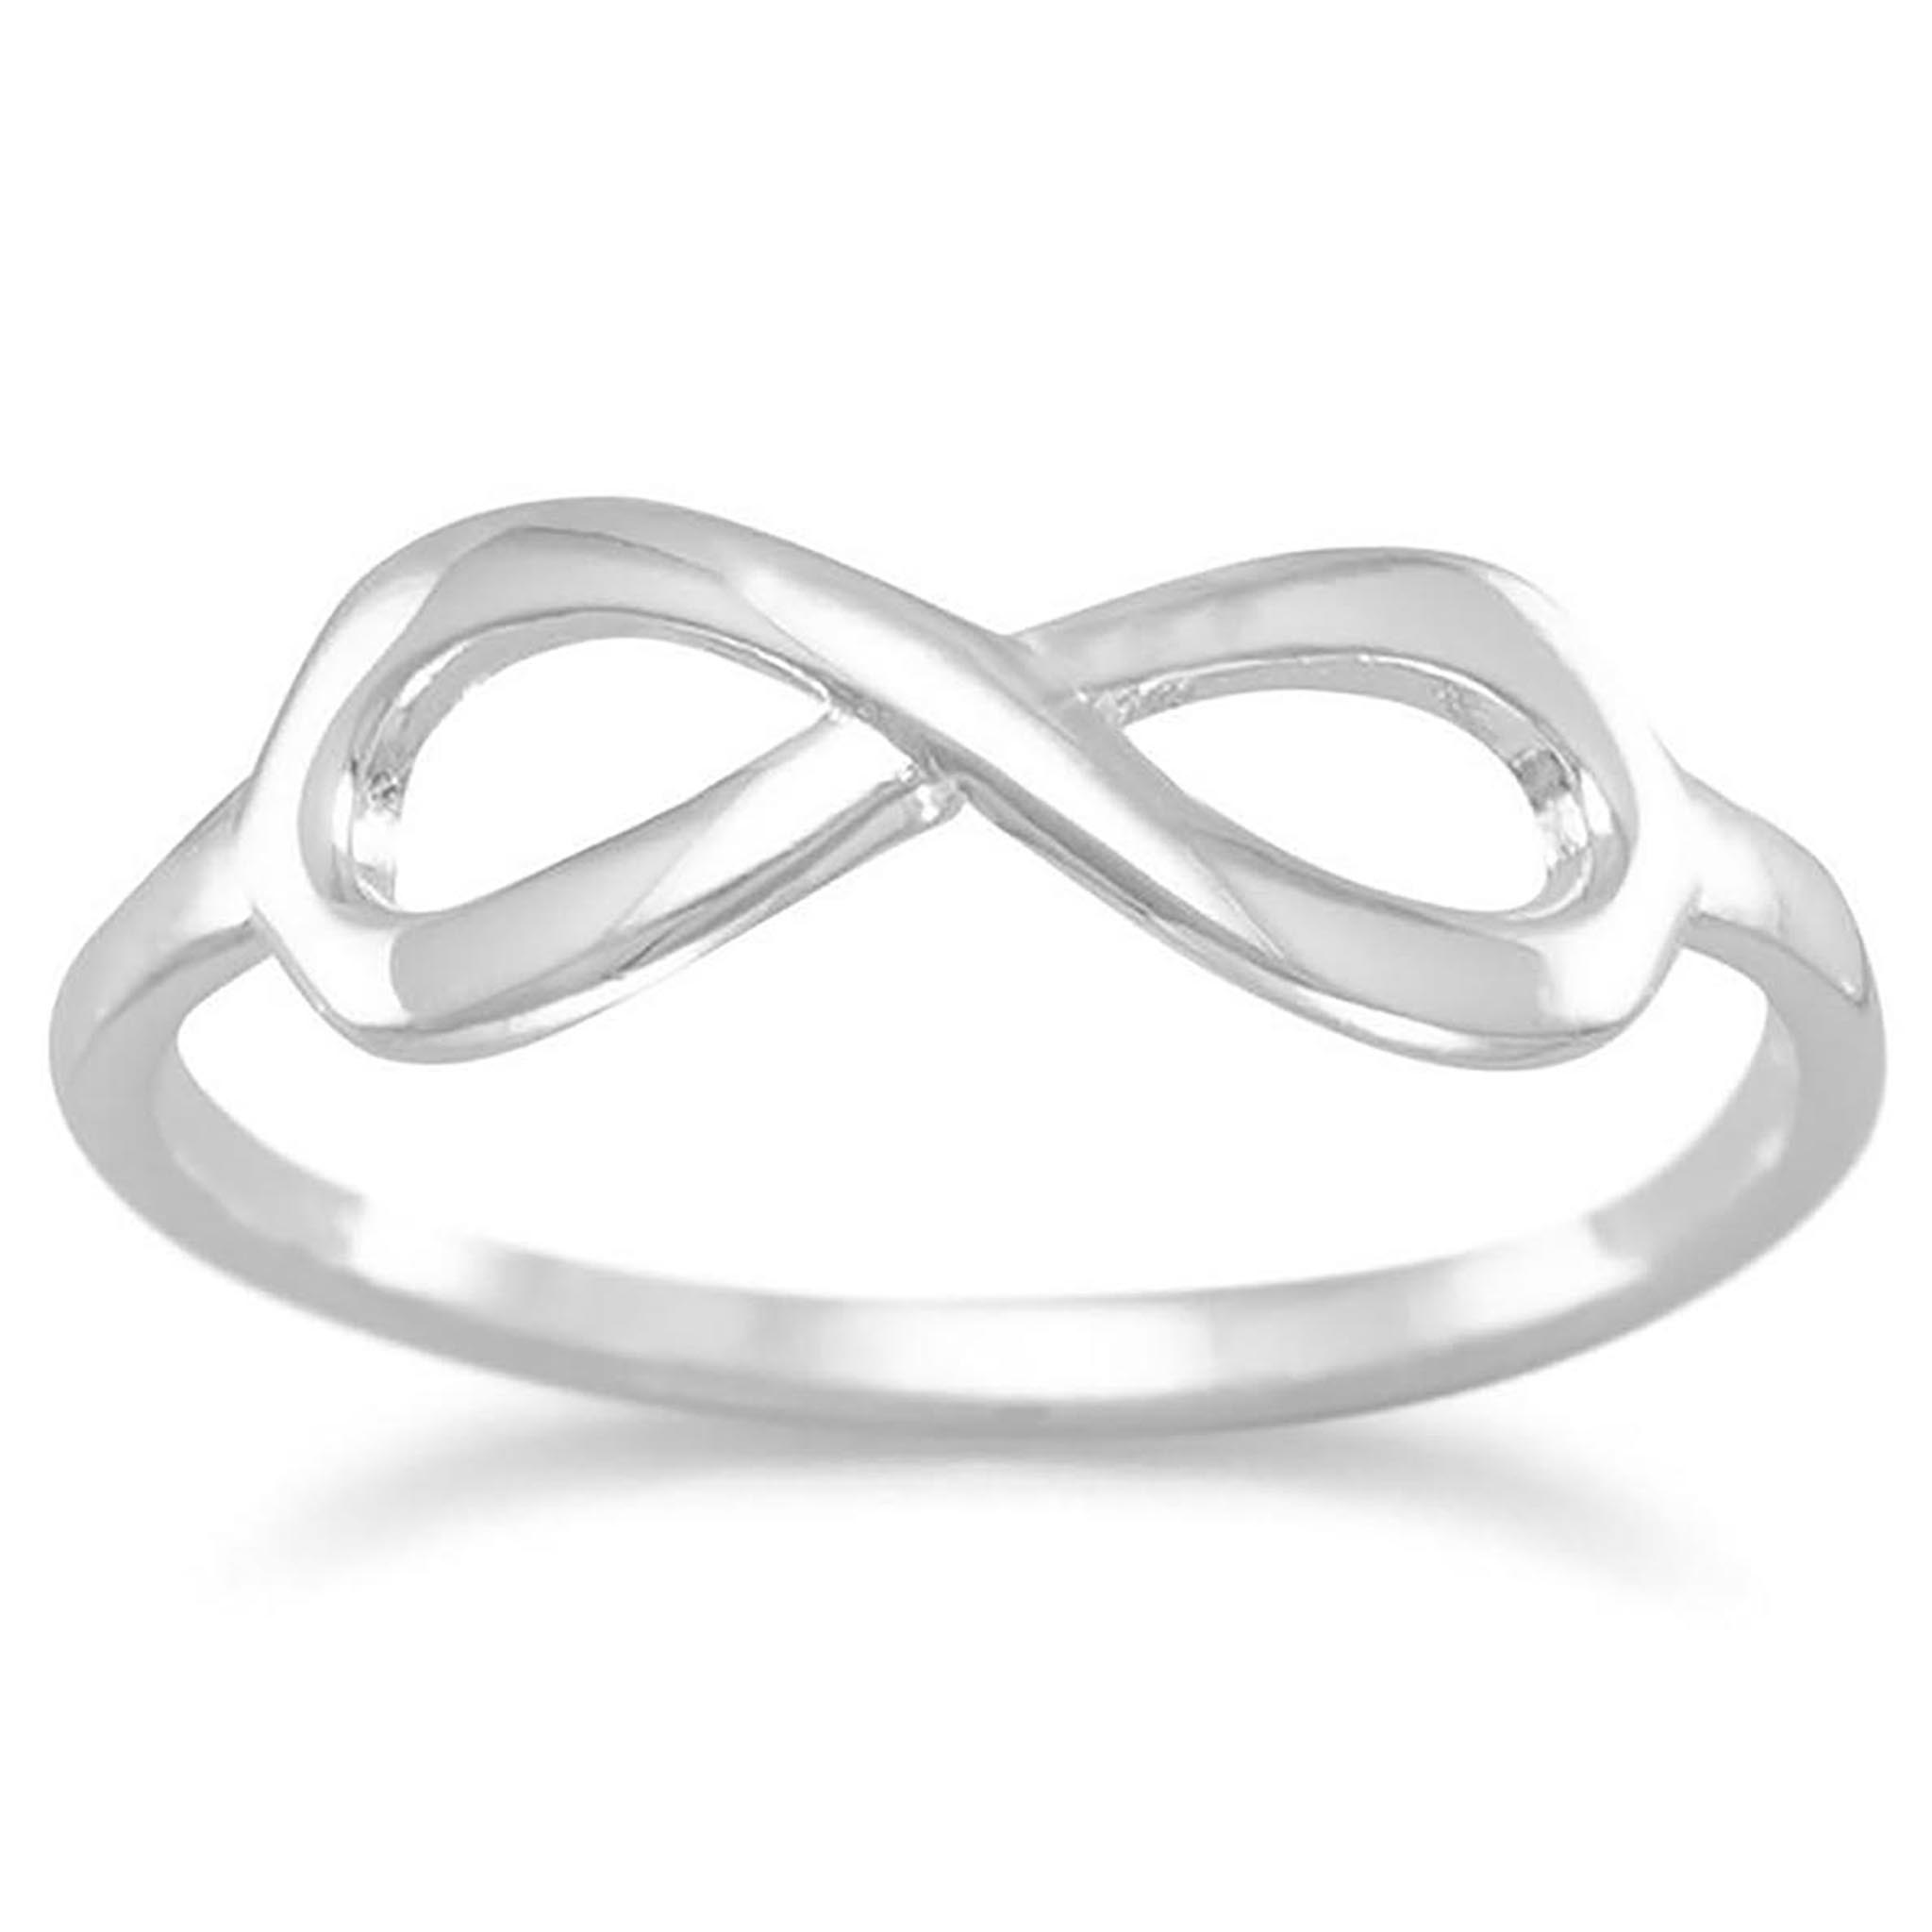 Polished Infinity Symbol Ring